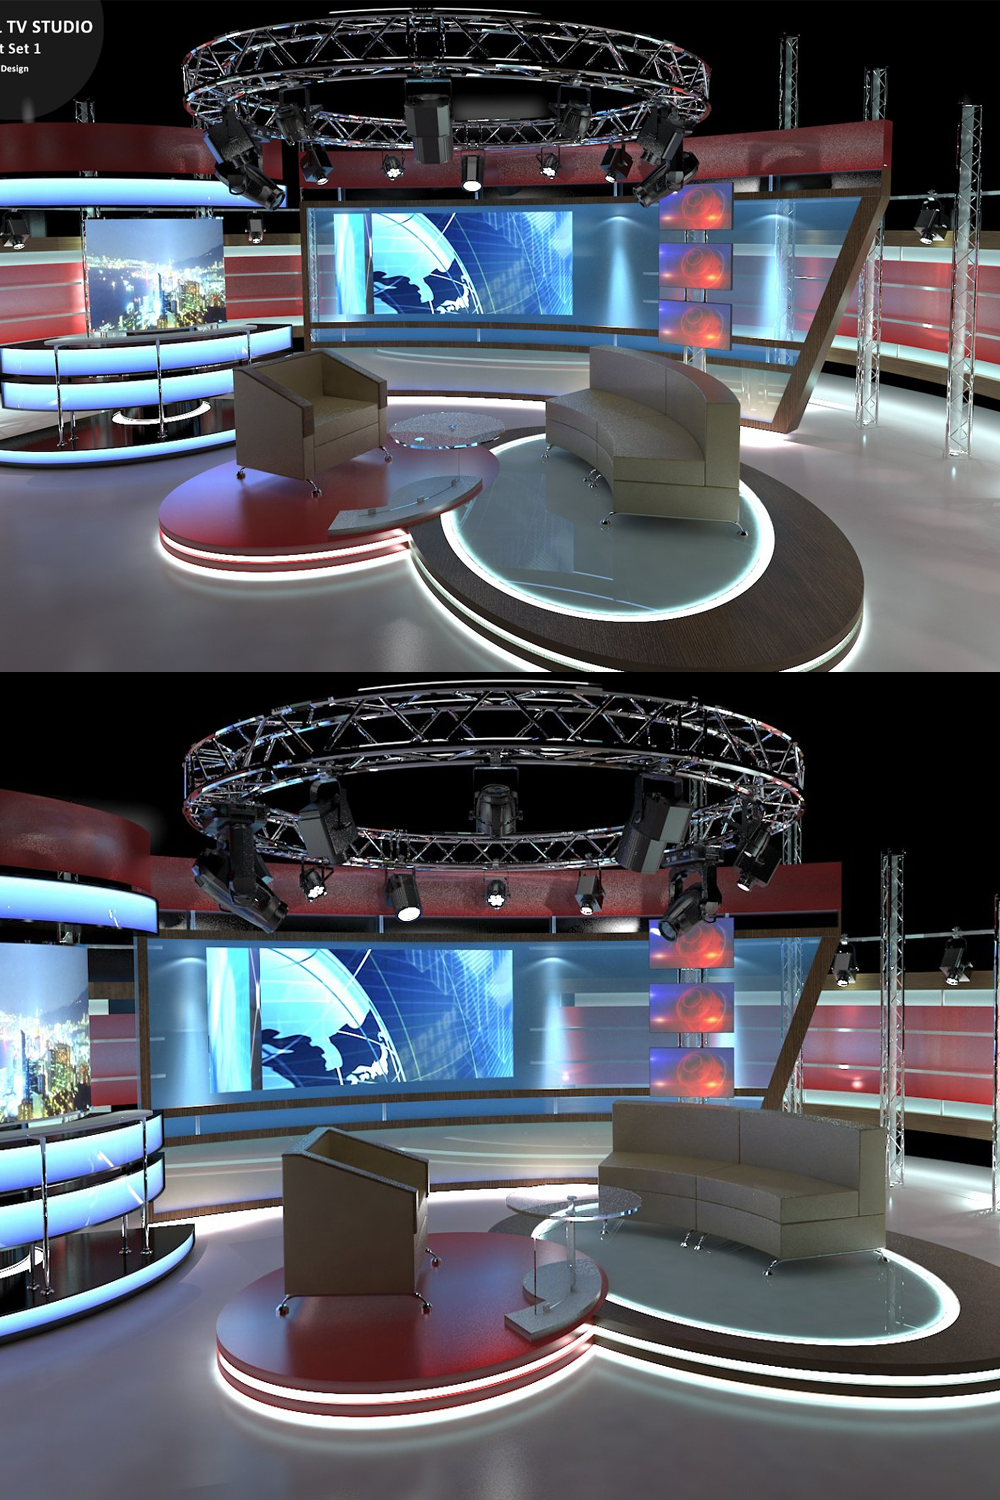 Illustrations virtual tv studio chat set of pinterest.